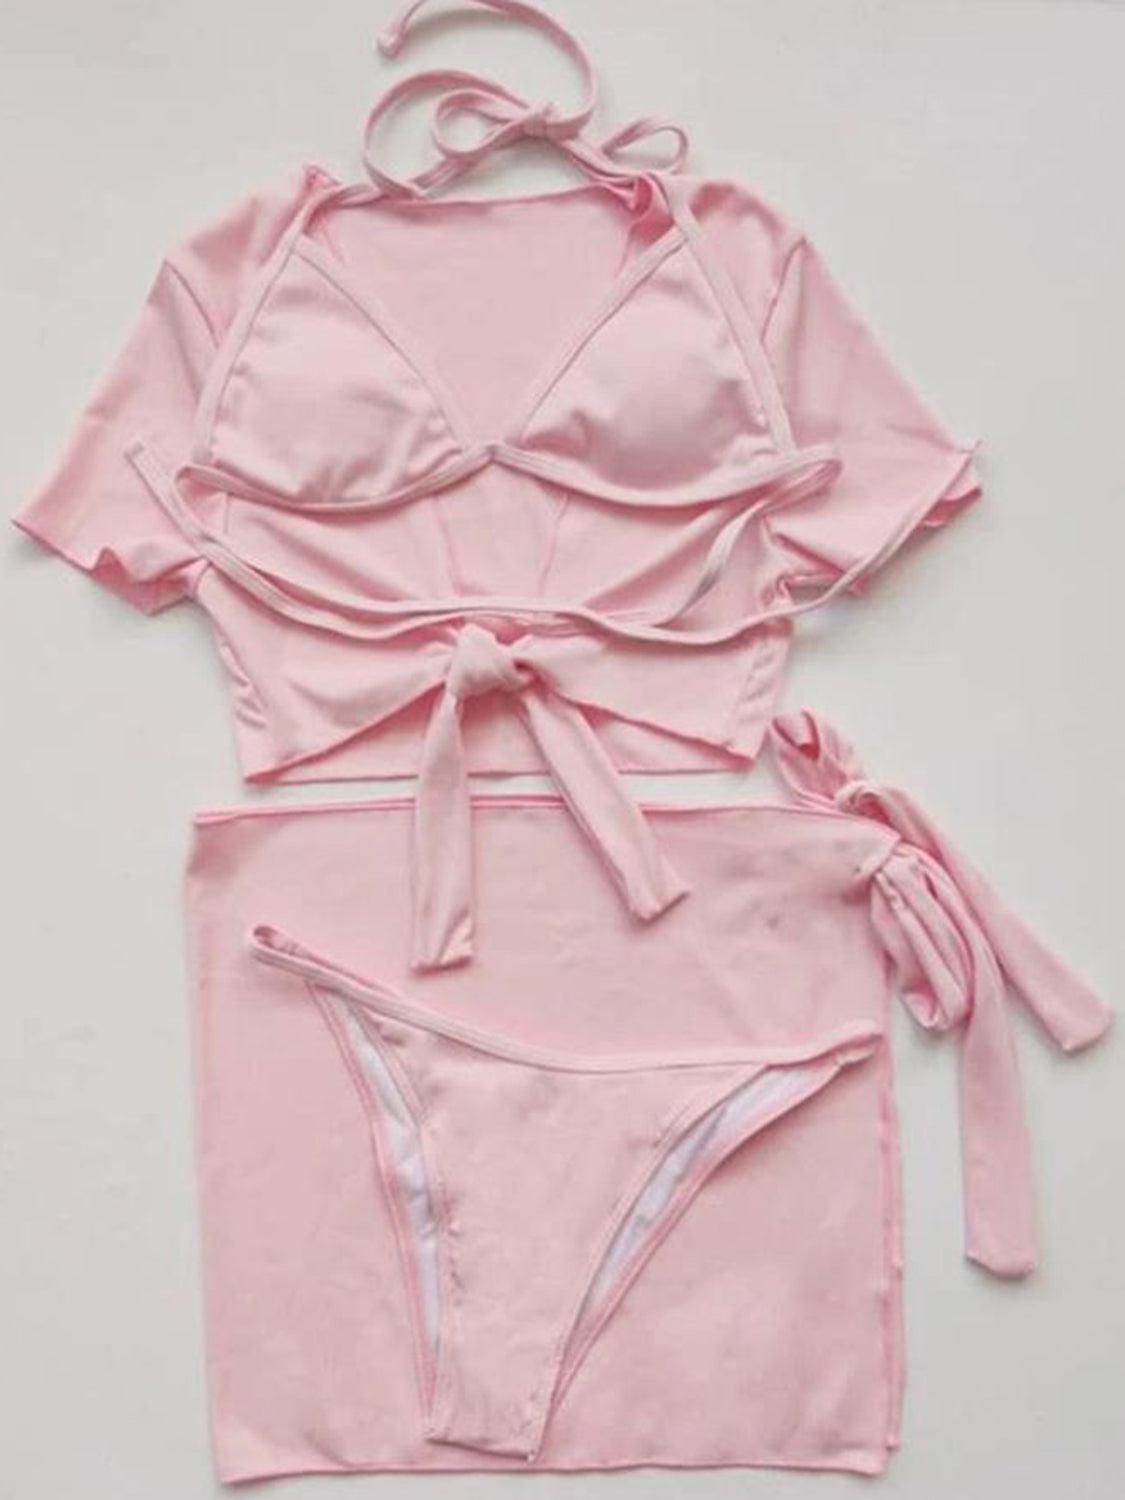 a pink bikinisuit with a tie around the waist